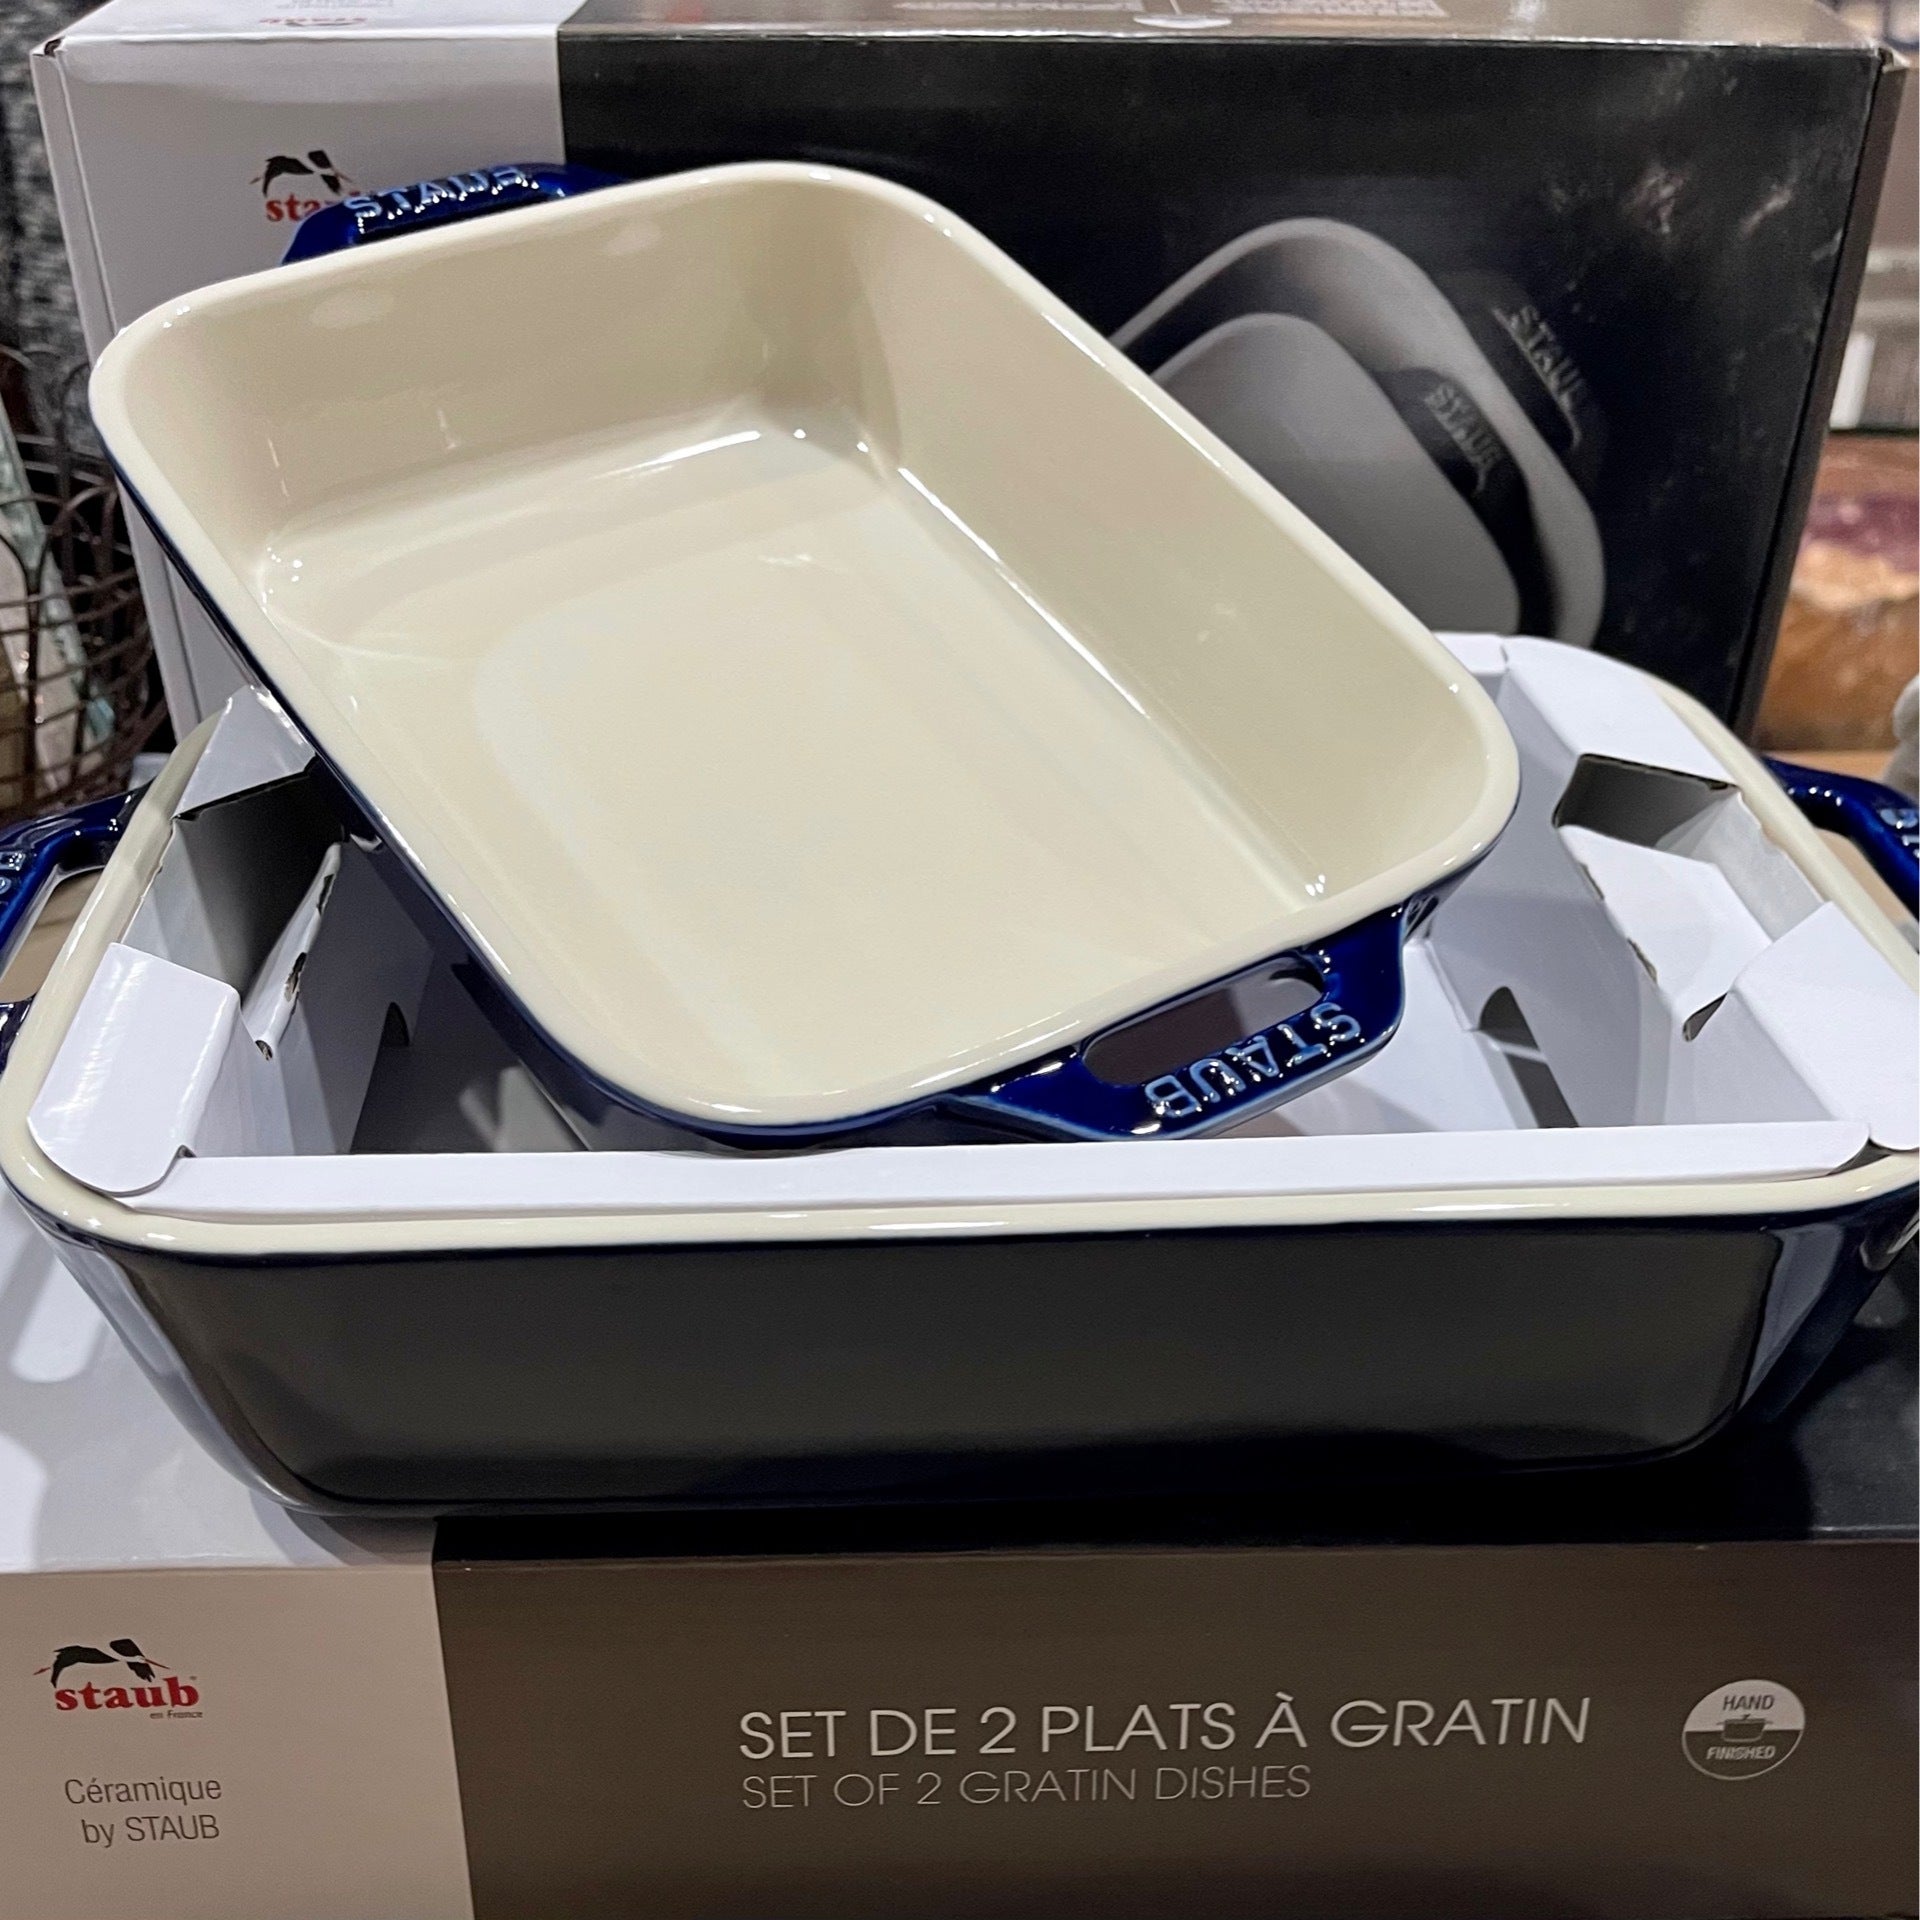 Staub Ceramic Oval Set of 2 Baking Dishes/Gratins - Cherry